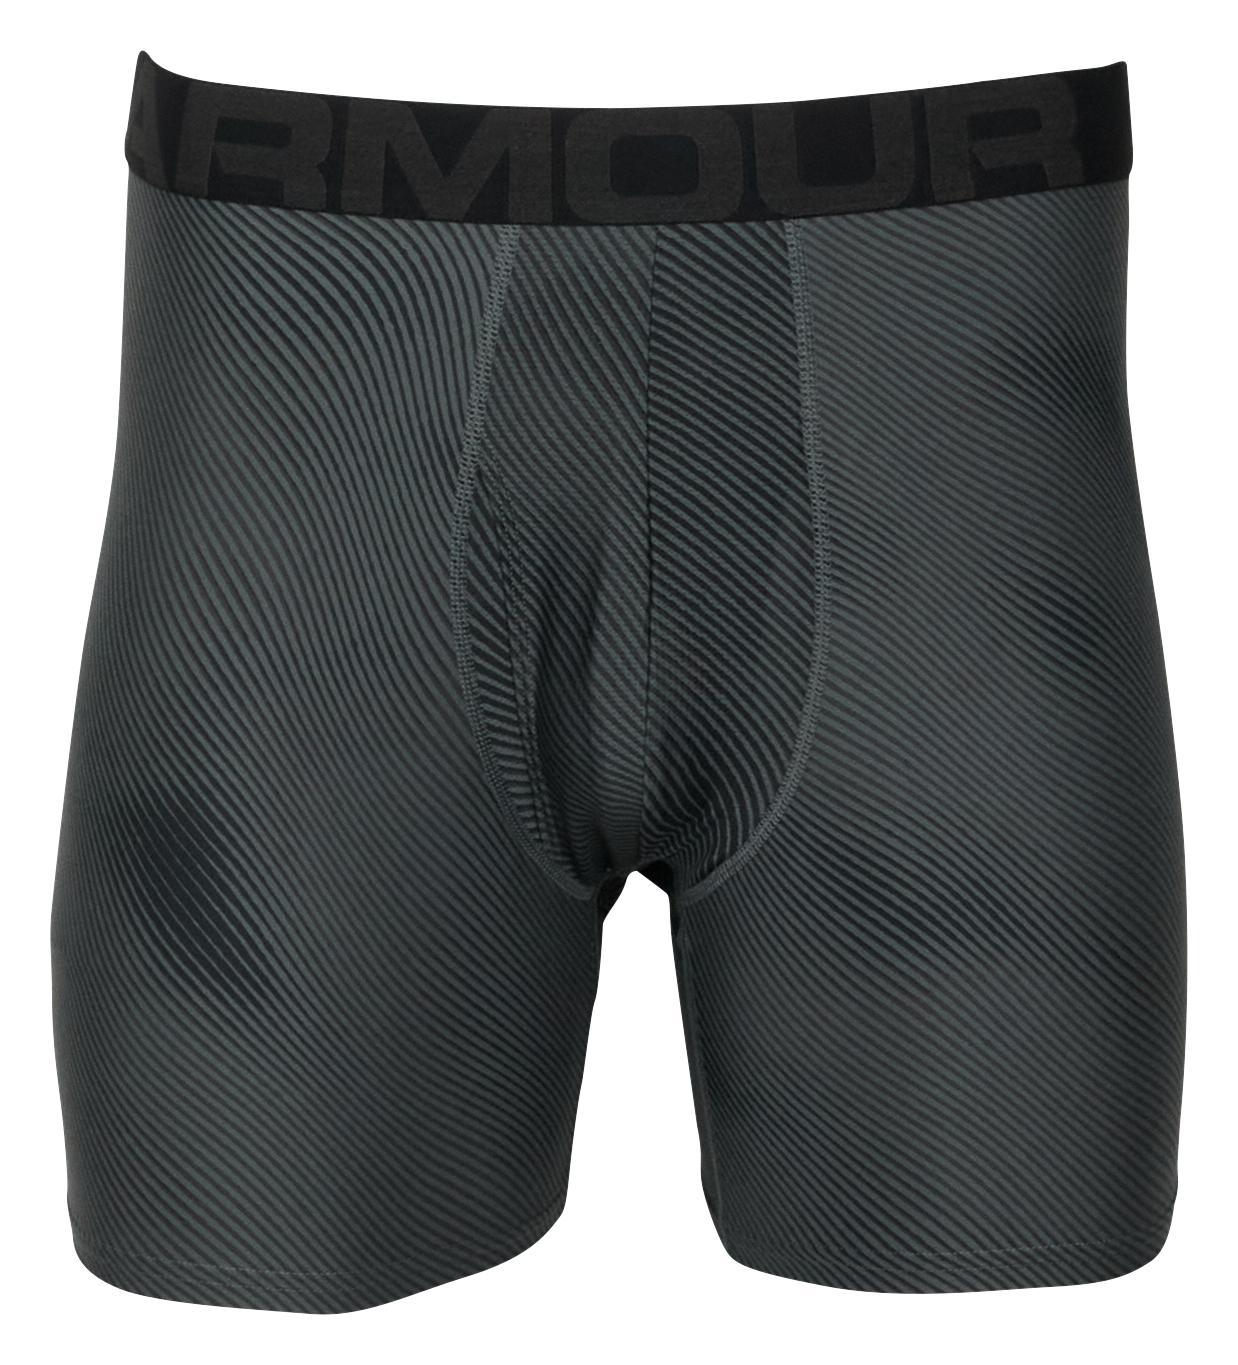 Under Armour Tech 6"" Patterned Boxerjock Shorts for Men - Pitch/Jet Gray - S